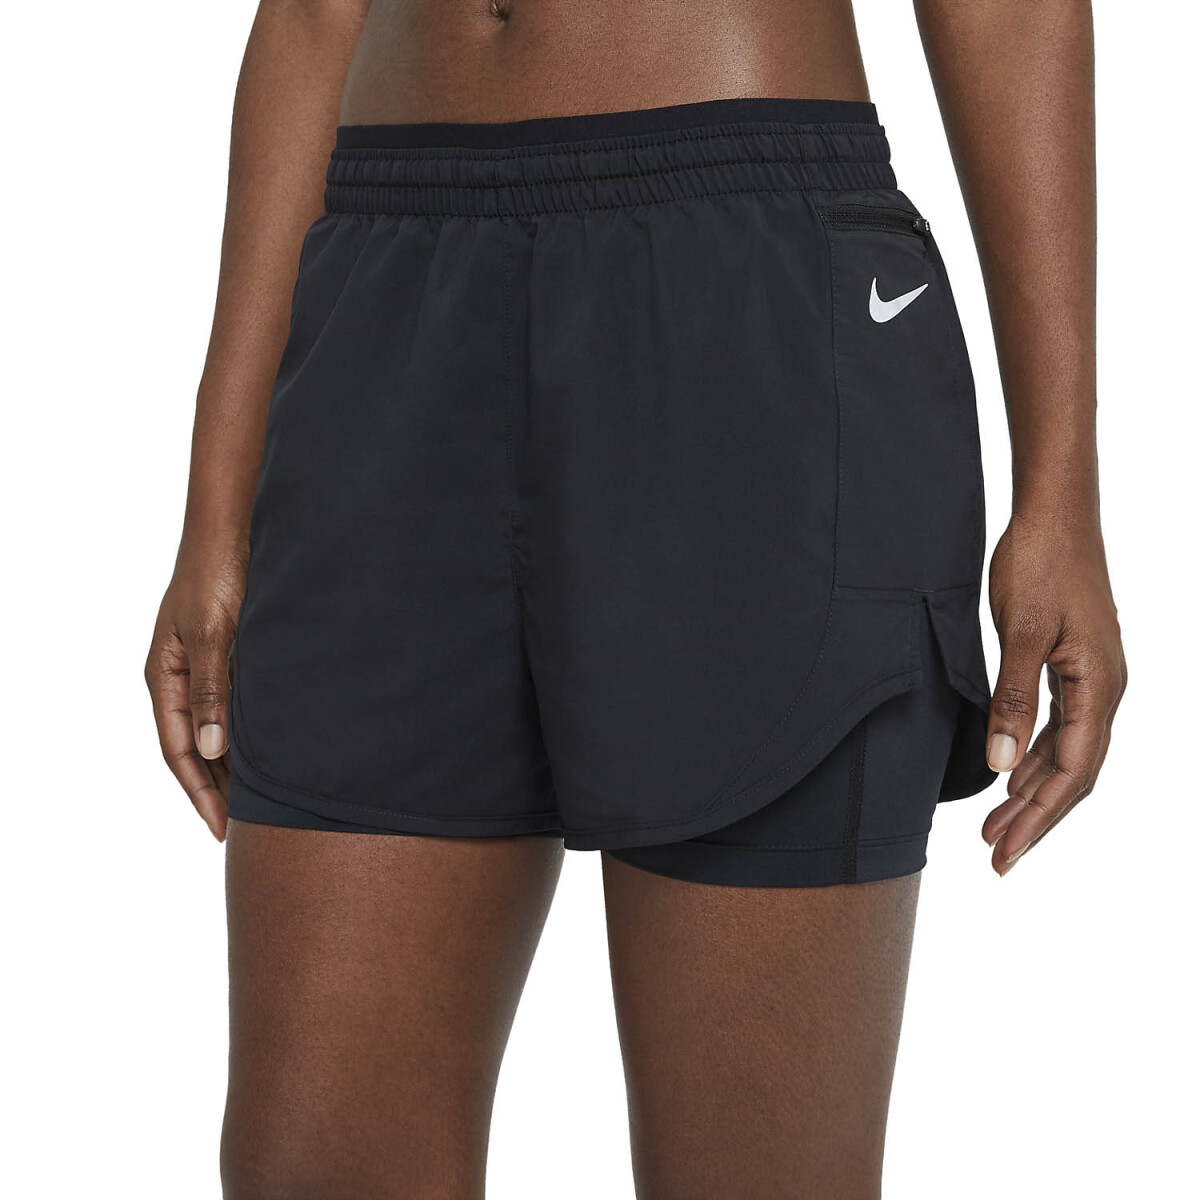 Short Nike Running Dama Tempo Luxe - Color Único 